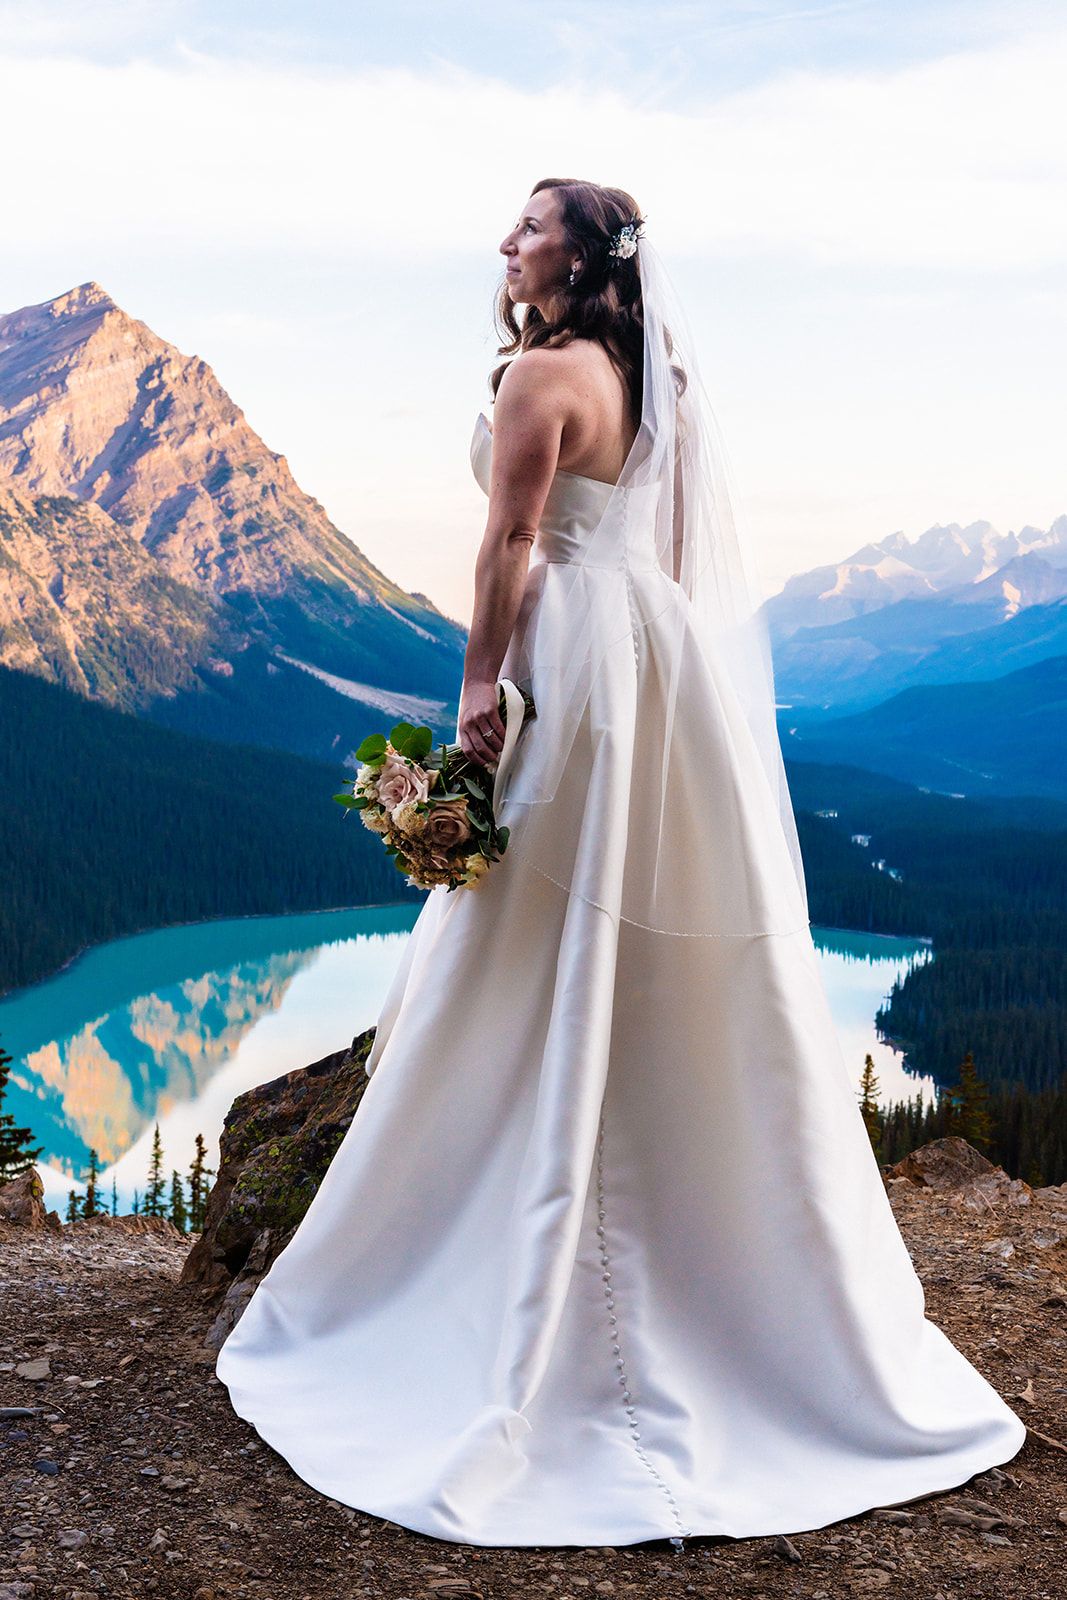 Stunning bride in a strapless wedding dress in Banff, Canada